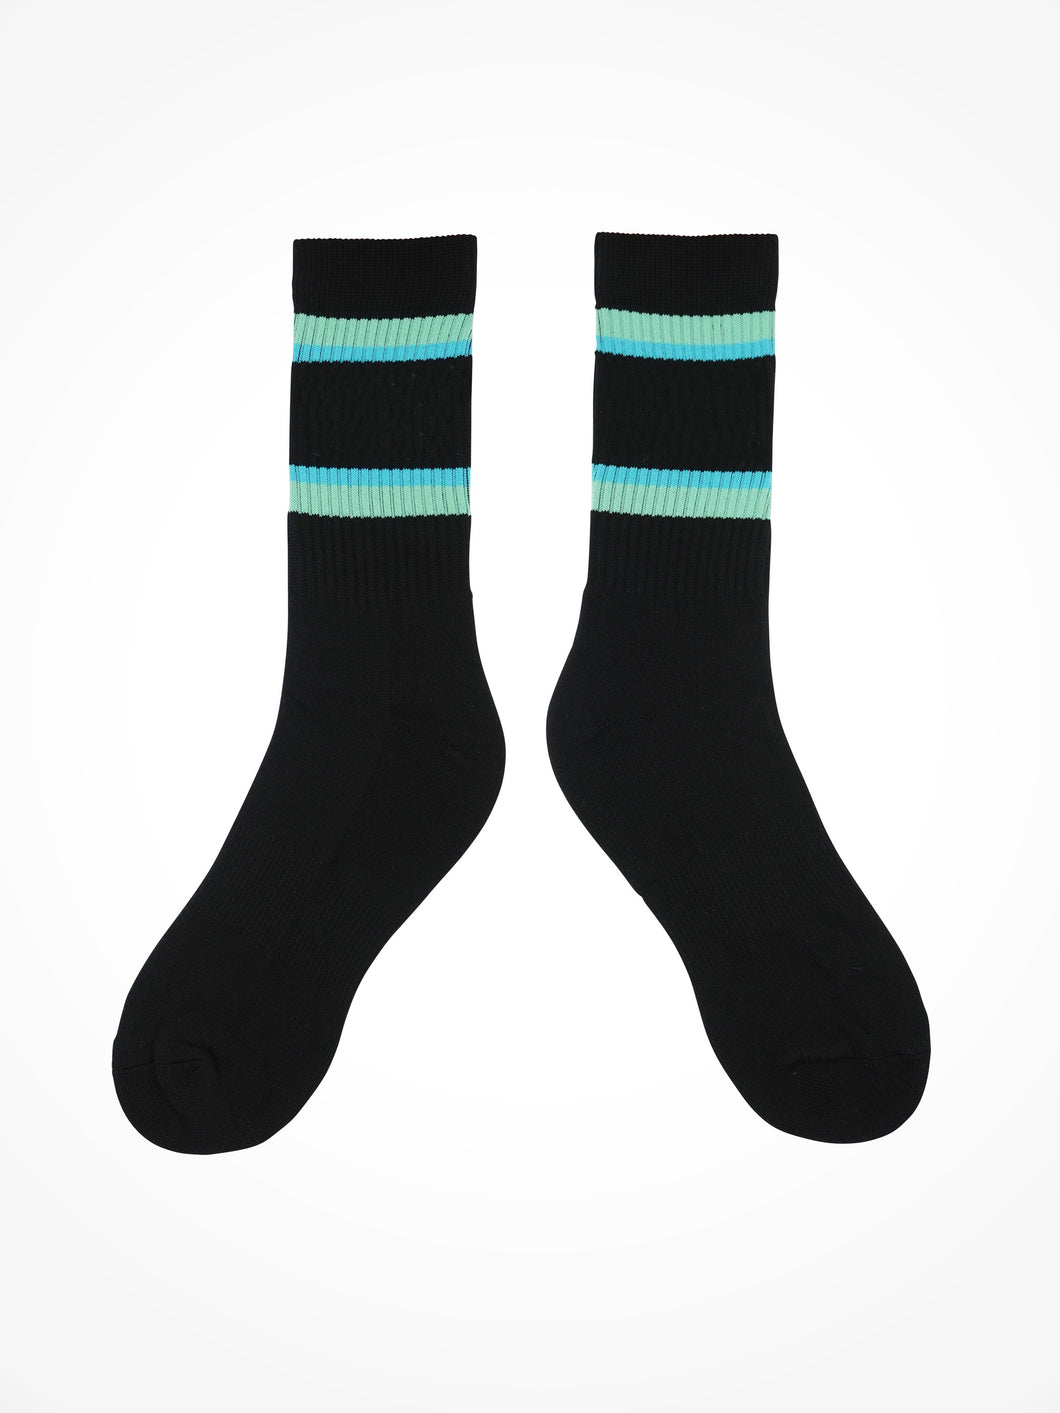 Black with Teal Stripe Socks